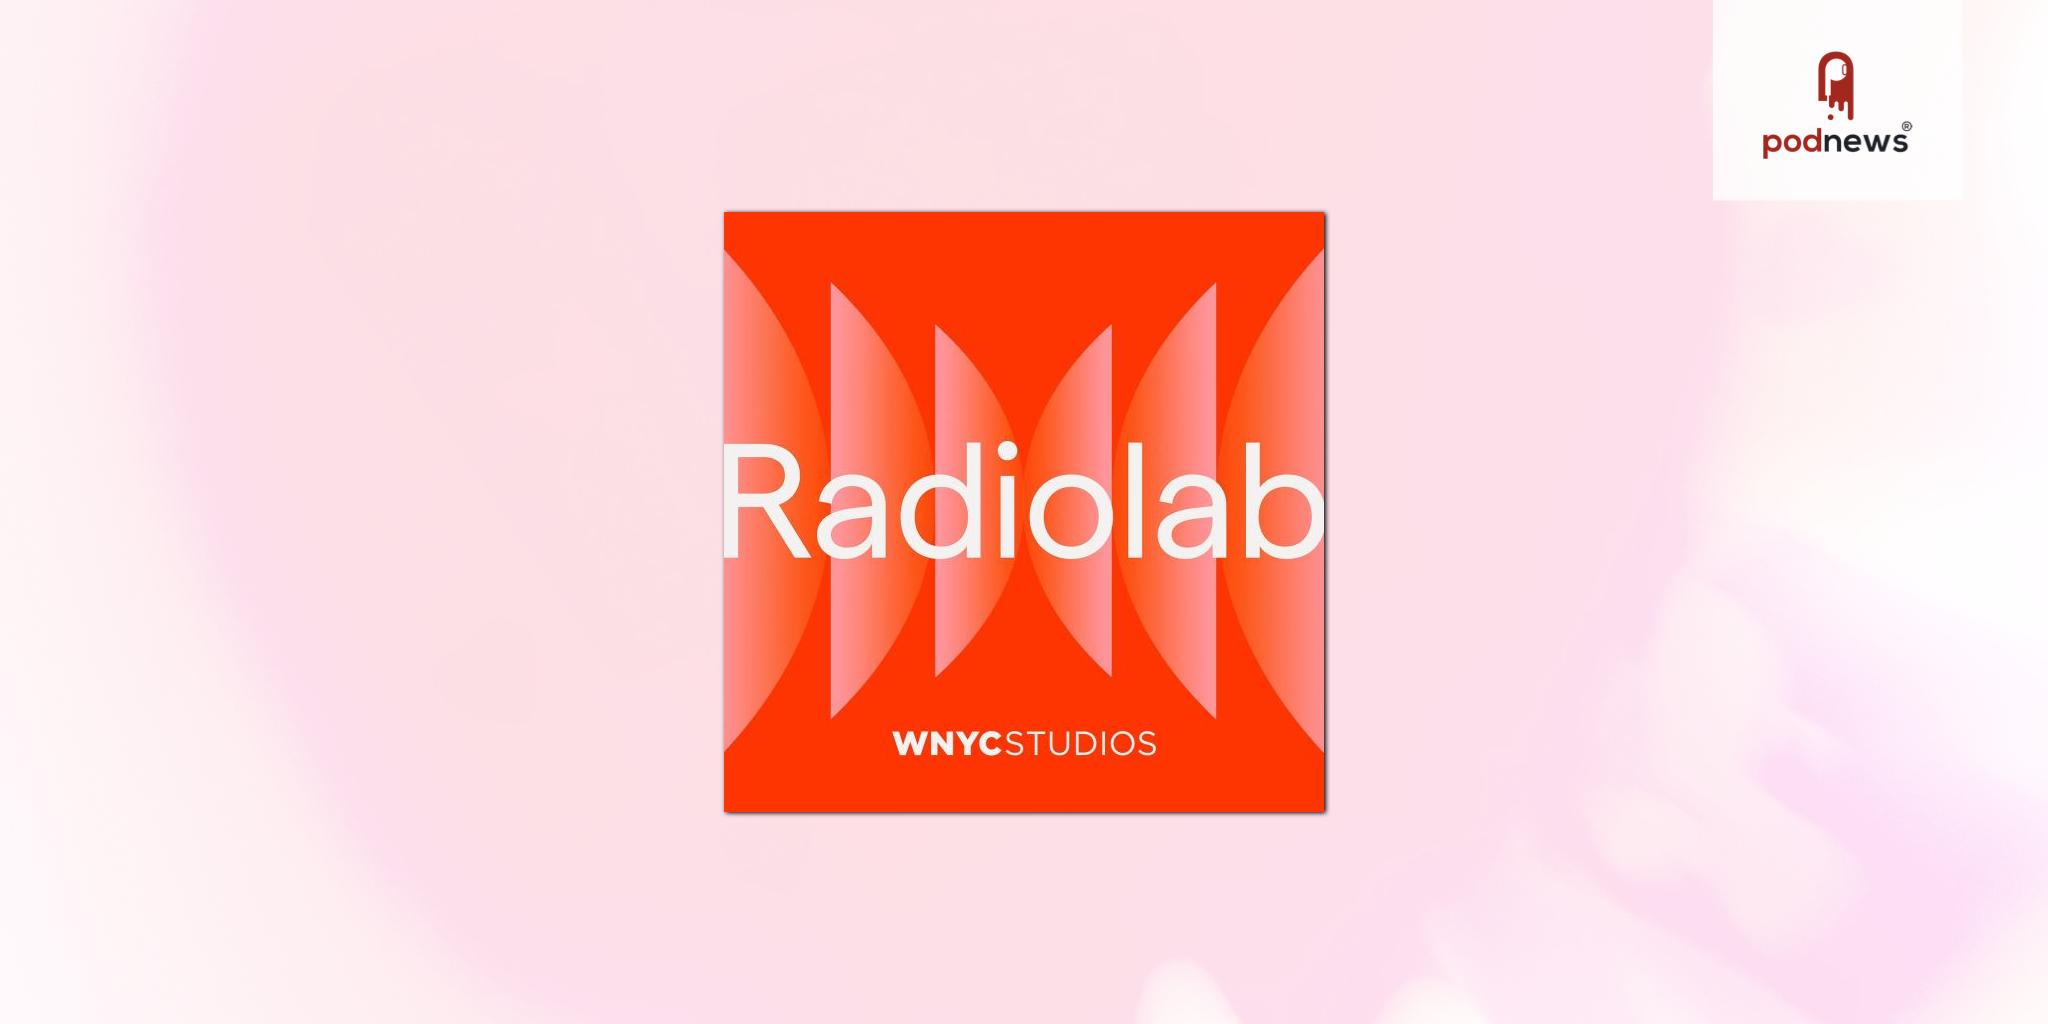 Radiolab from WNYC Studios presents 'MIXTAPE'